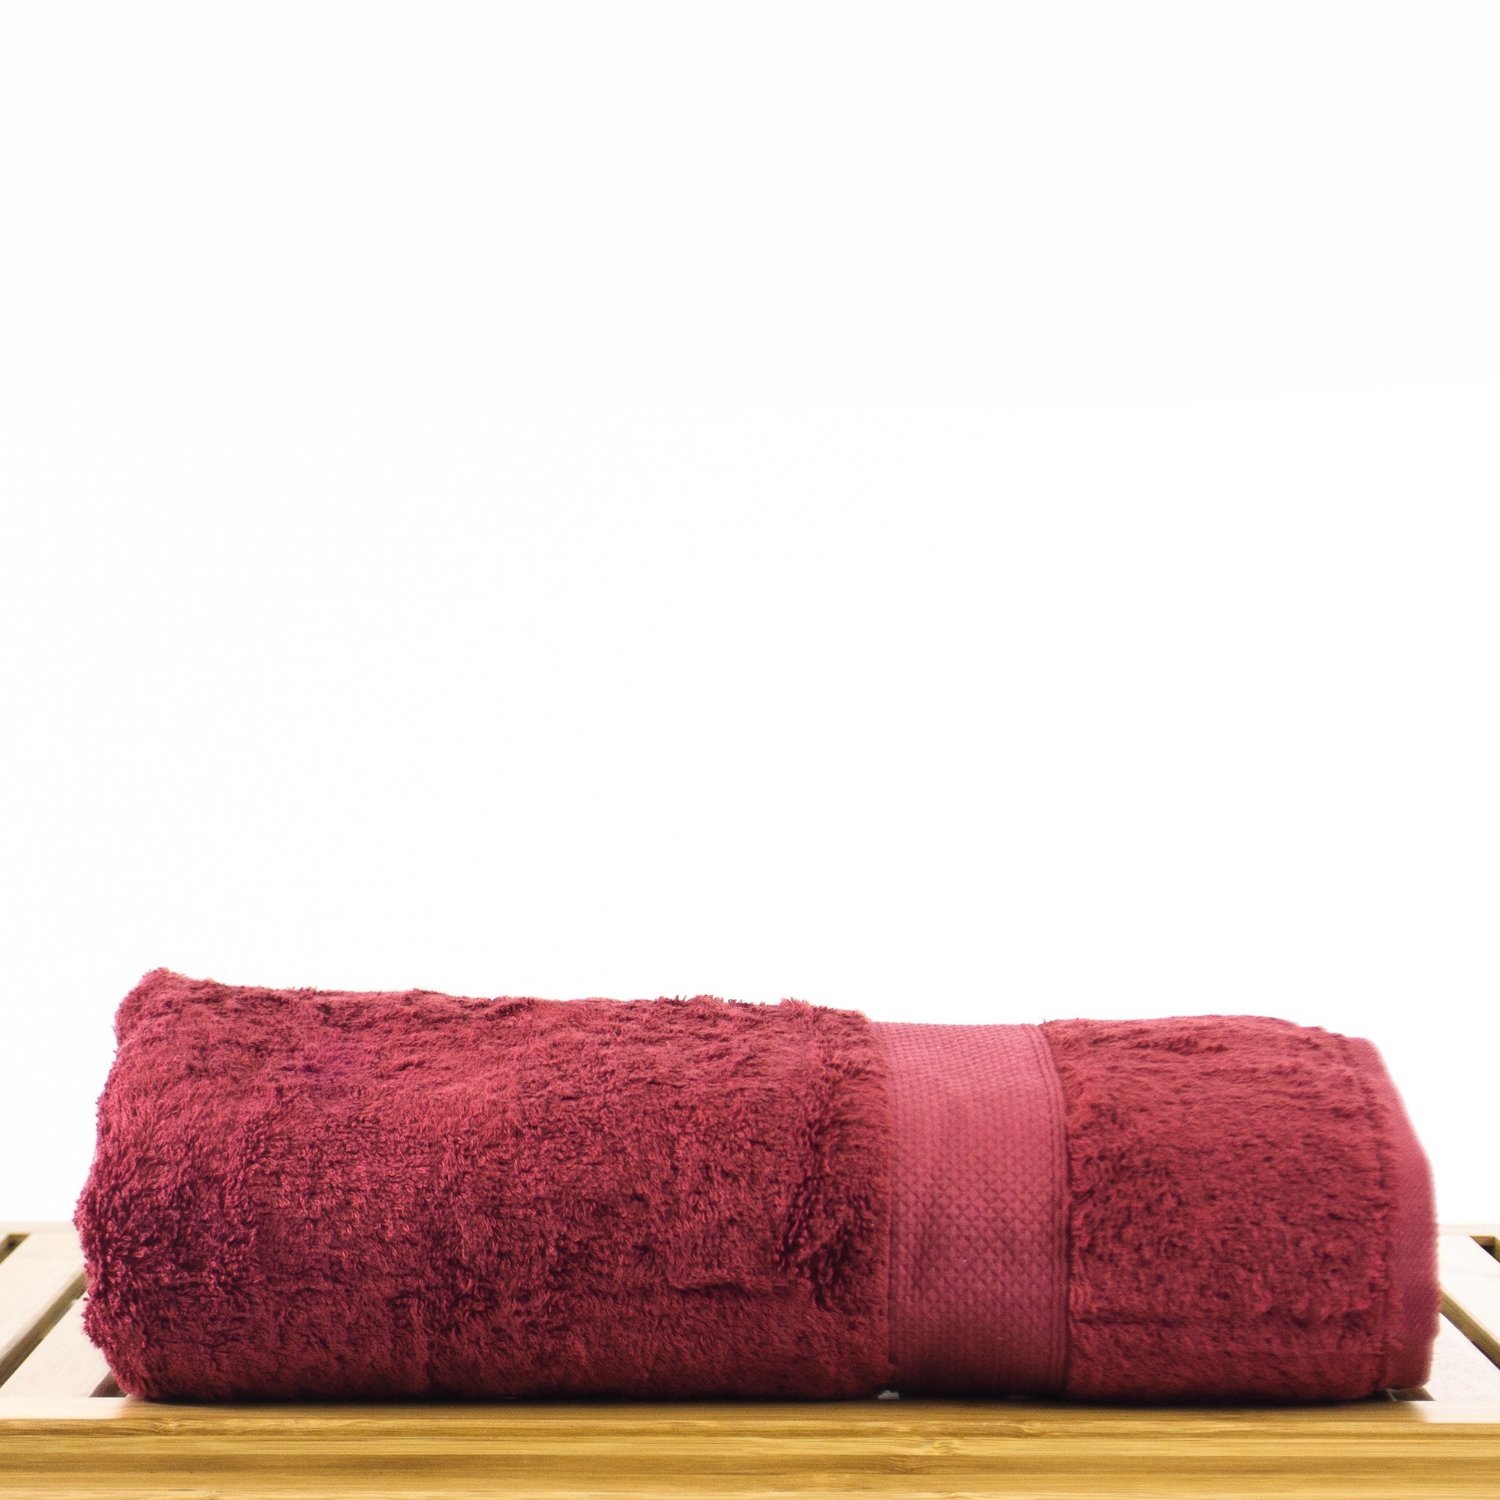 27" x 54" - 17 lbs/doz - %100 Turkish Cotton Cranberry Bath Towel - Dobby Border-Robemart.com